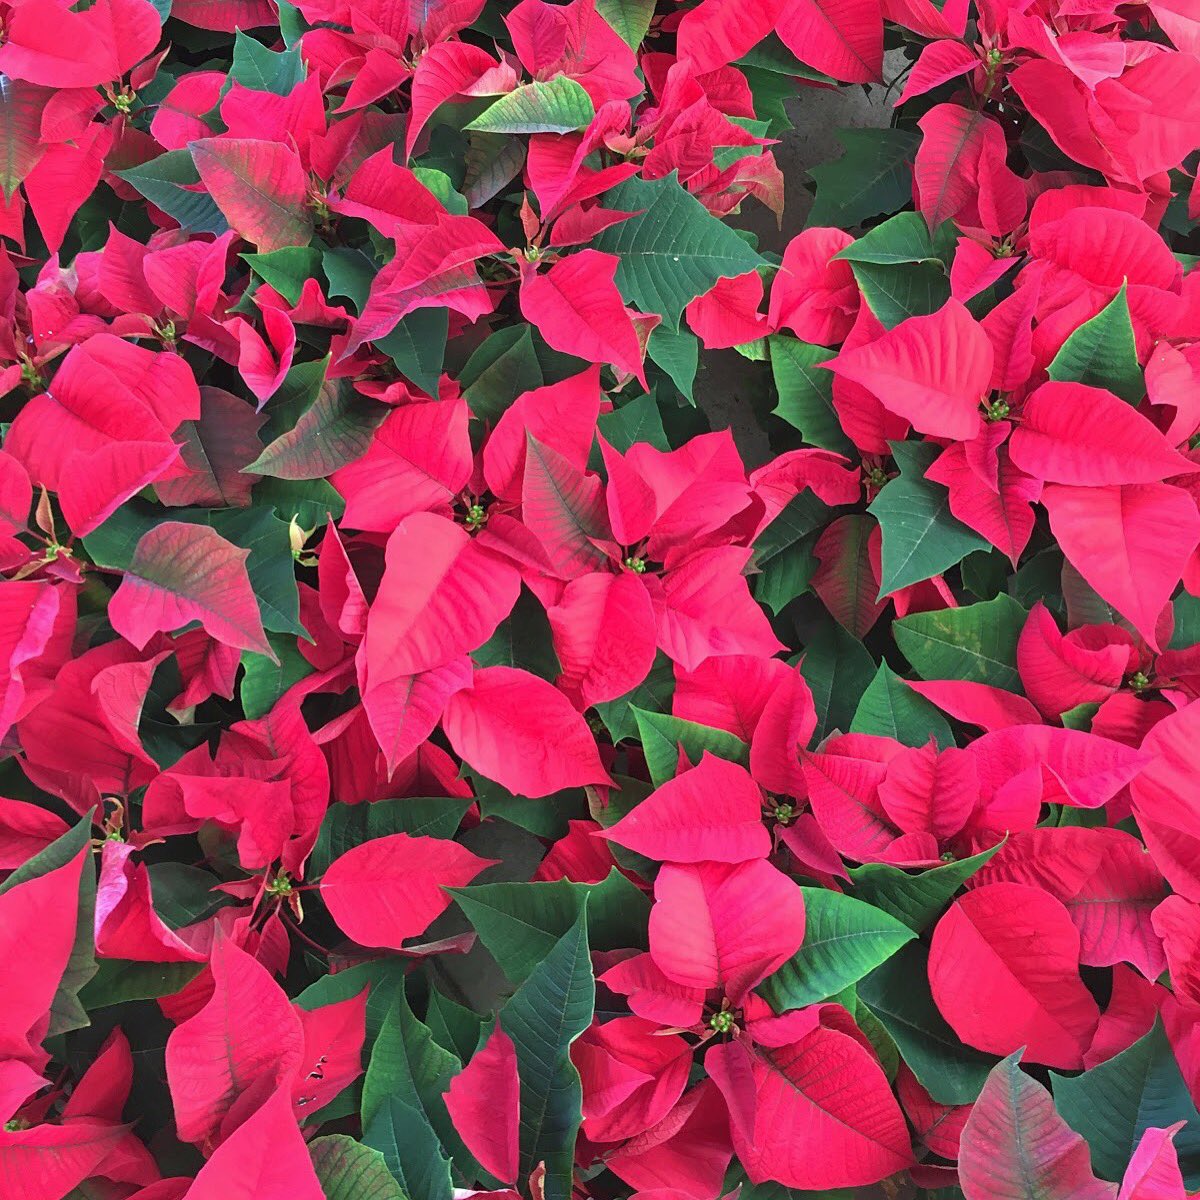 No flower says Christmas like a #poinsettia ❤️???????? https://t.co/Bjnc0ztqsv